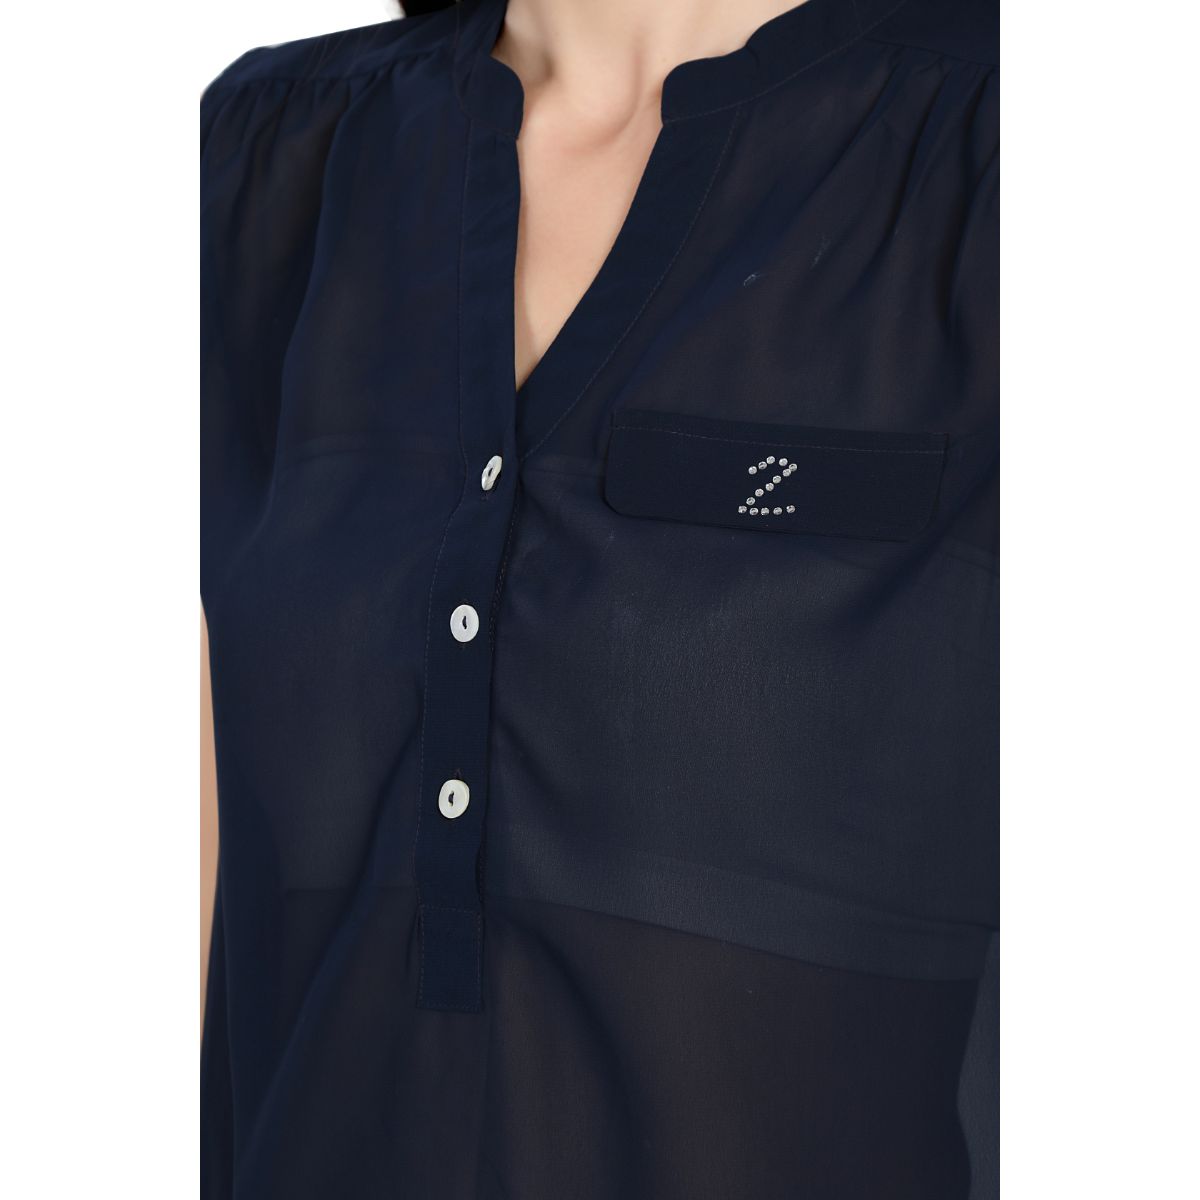 Mantra Navy Blue Basic sleeveless top